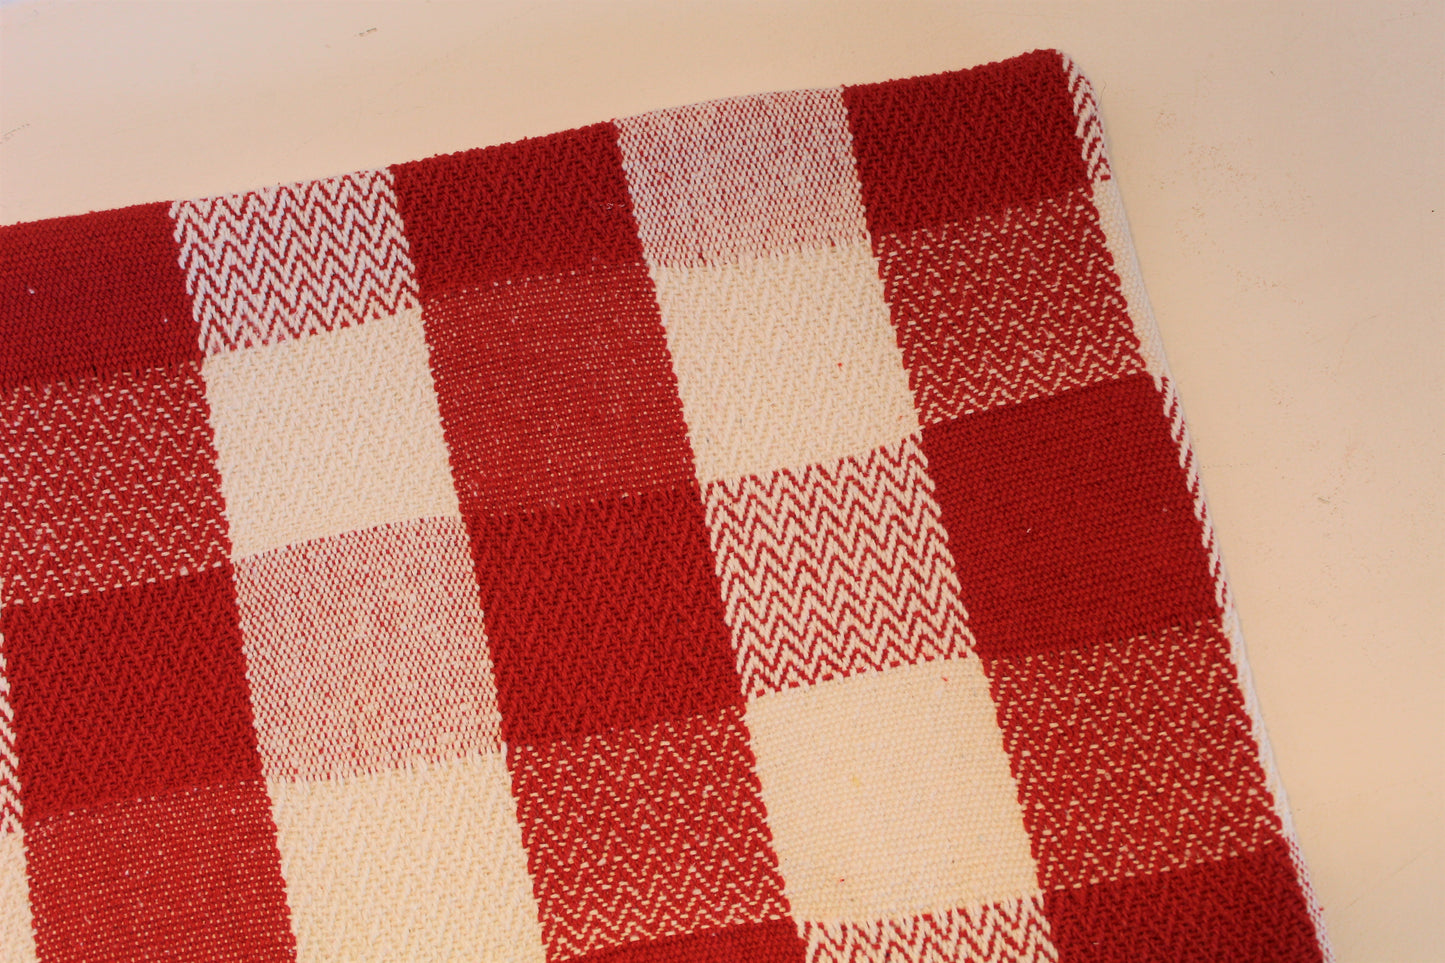 Red/White Checkerboard - Cushion Cover - 47cm x 47cm